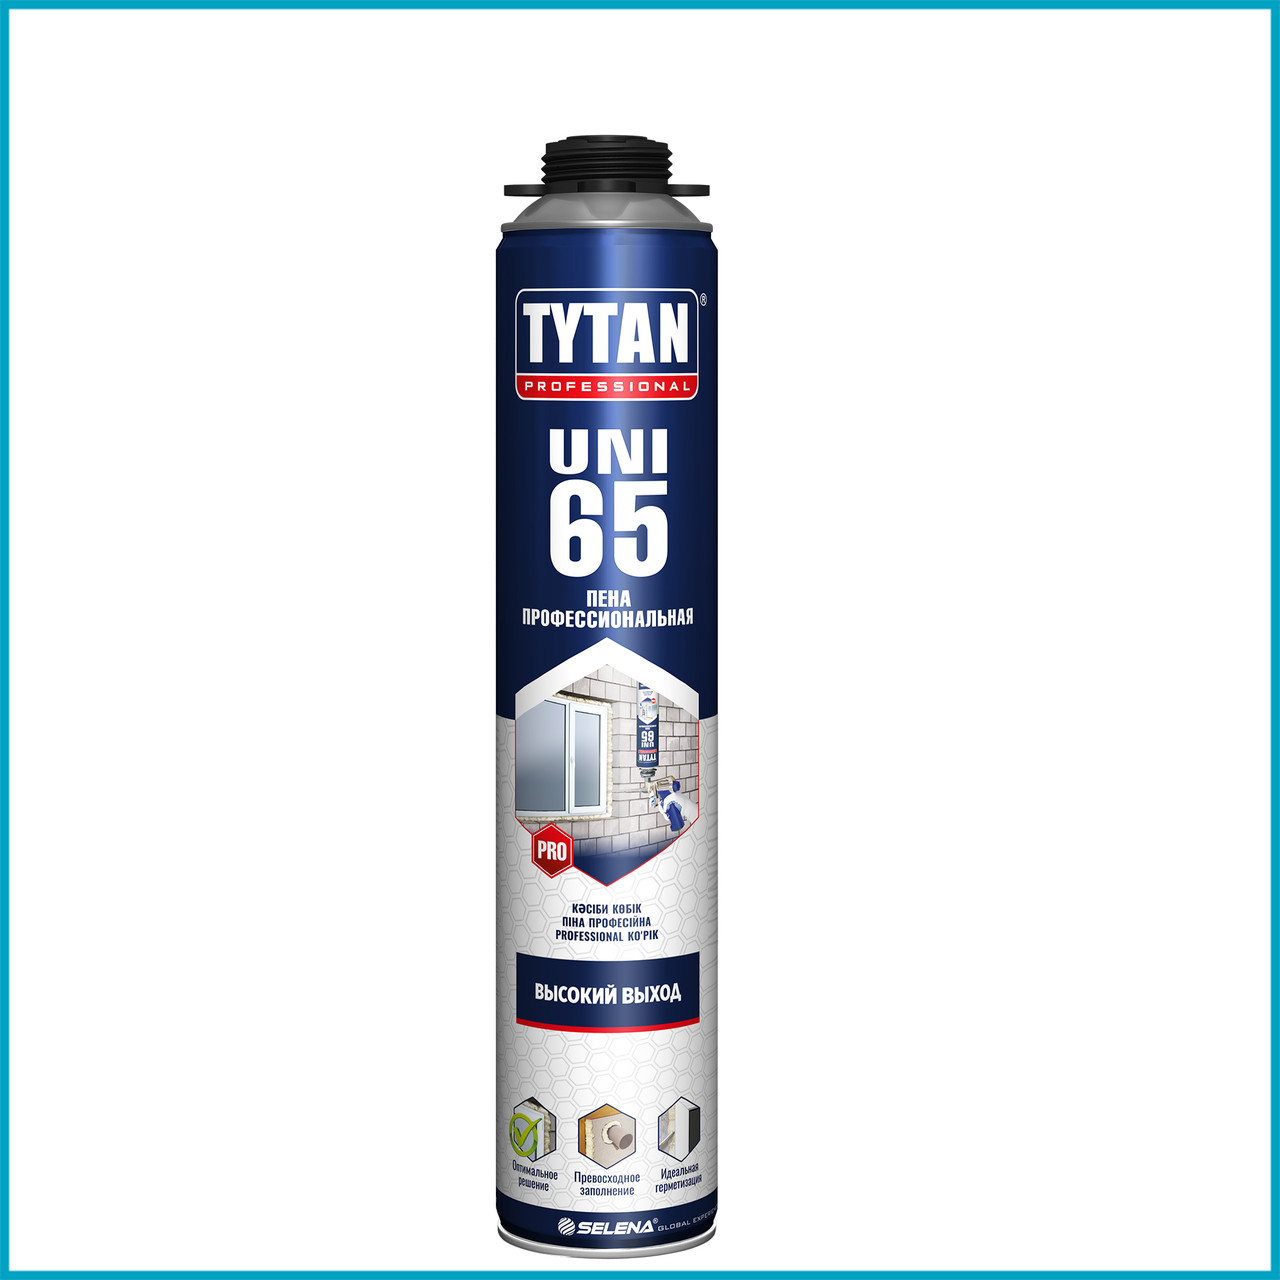 Tytan Professional 65 (Титан профессионал) профессиональная монтажная пена 750 мл (Польша) выход до 65 л